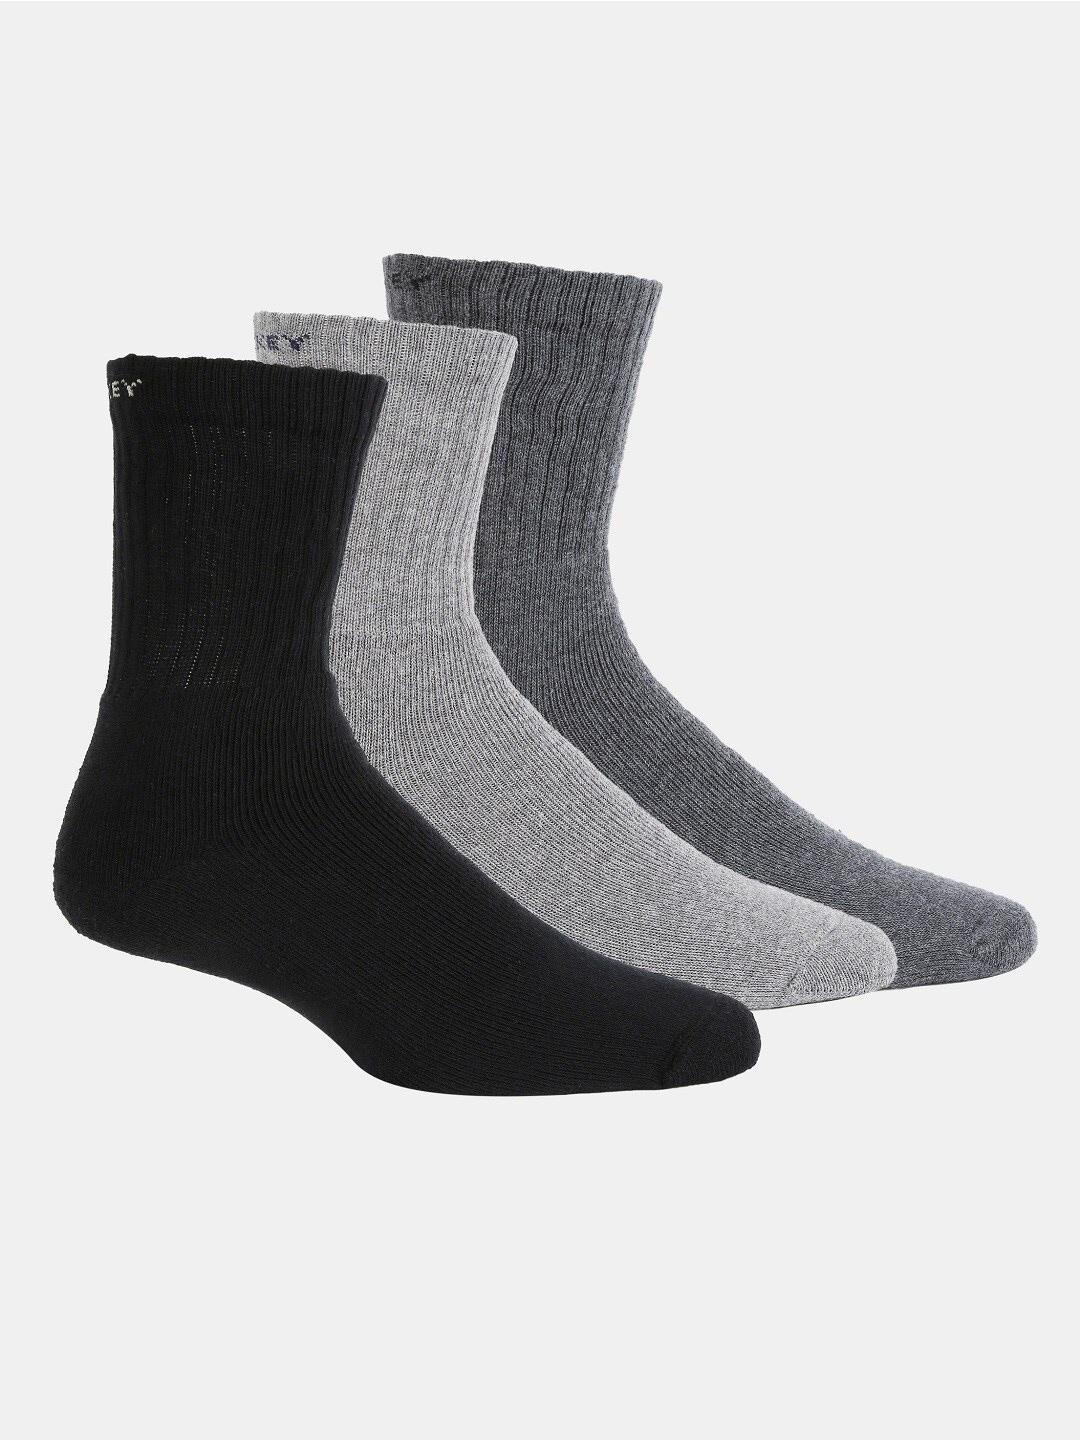 jockey-men-pack-of-3--black-&-grey-solid-cotton-calf-length-socks